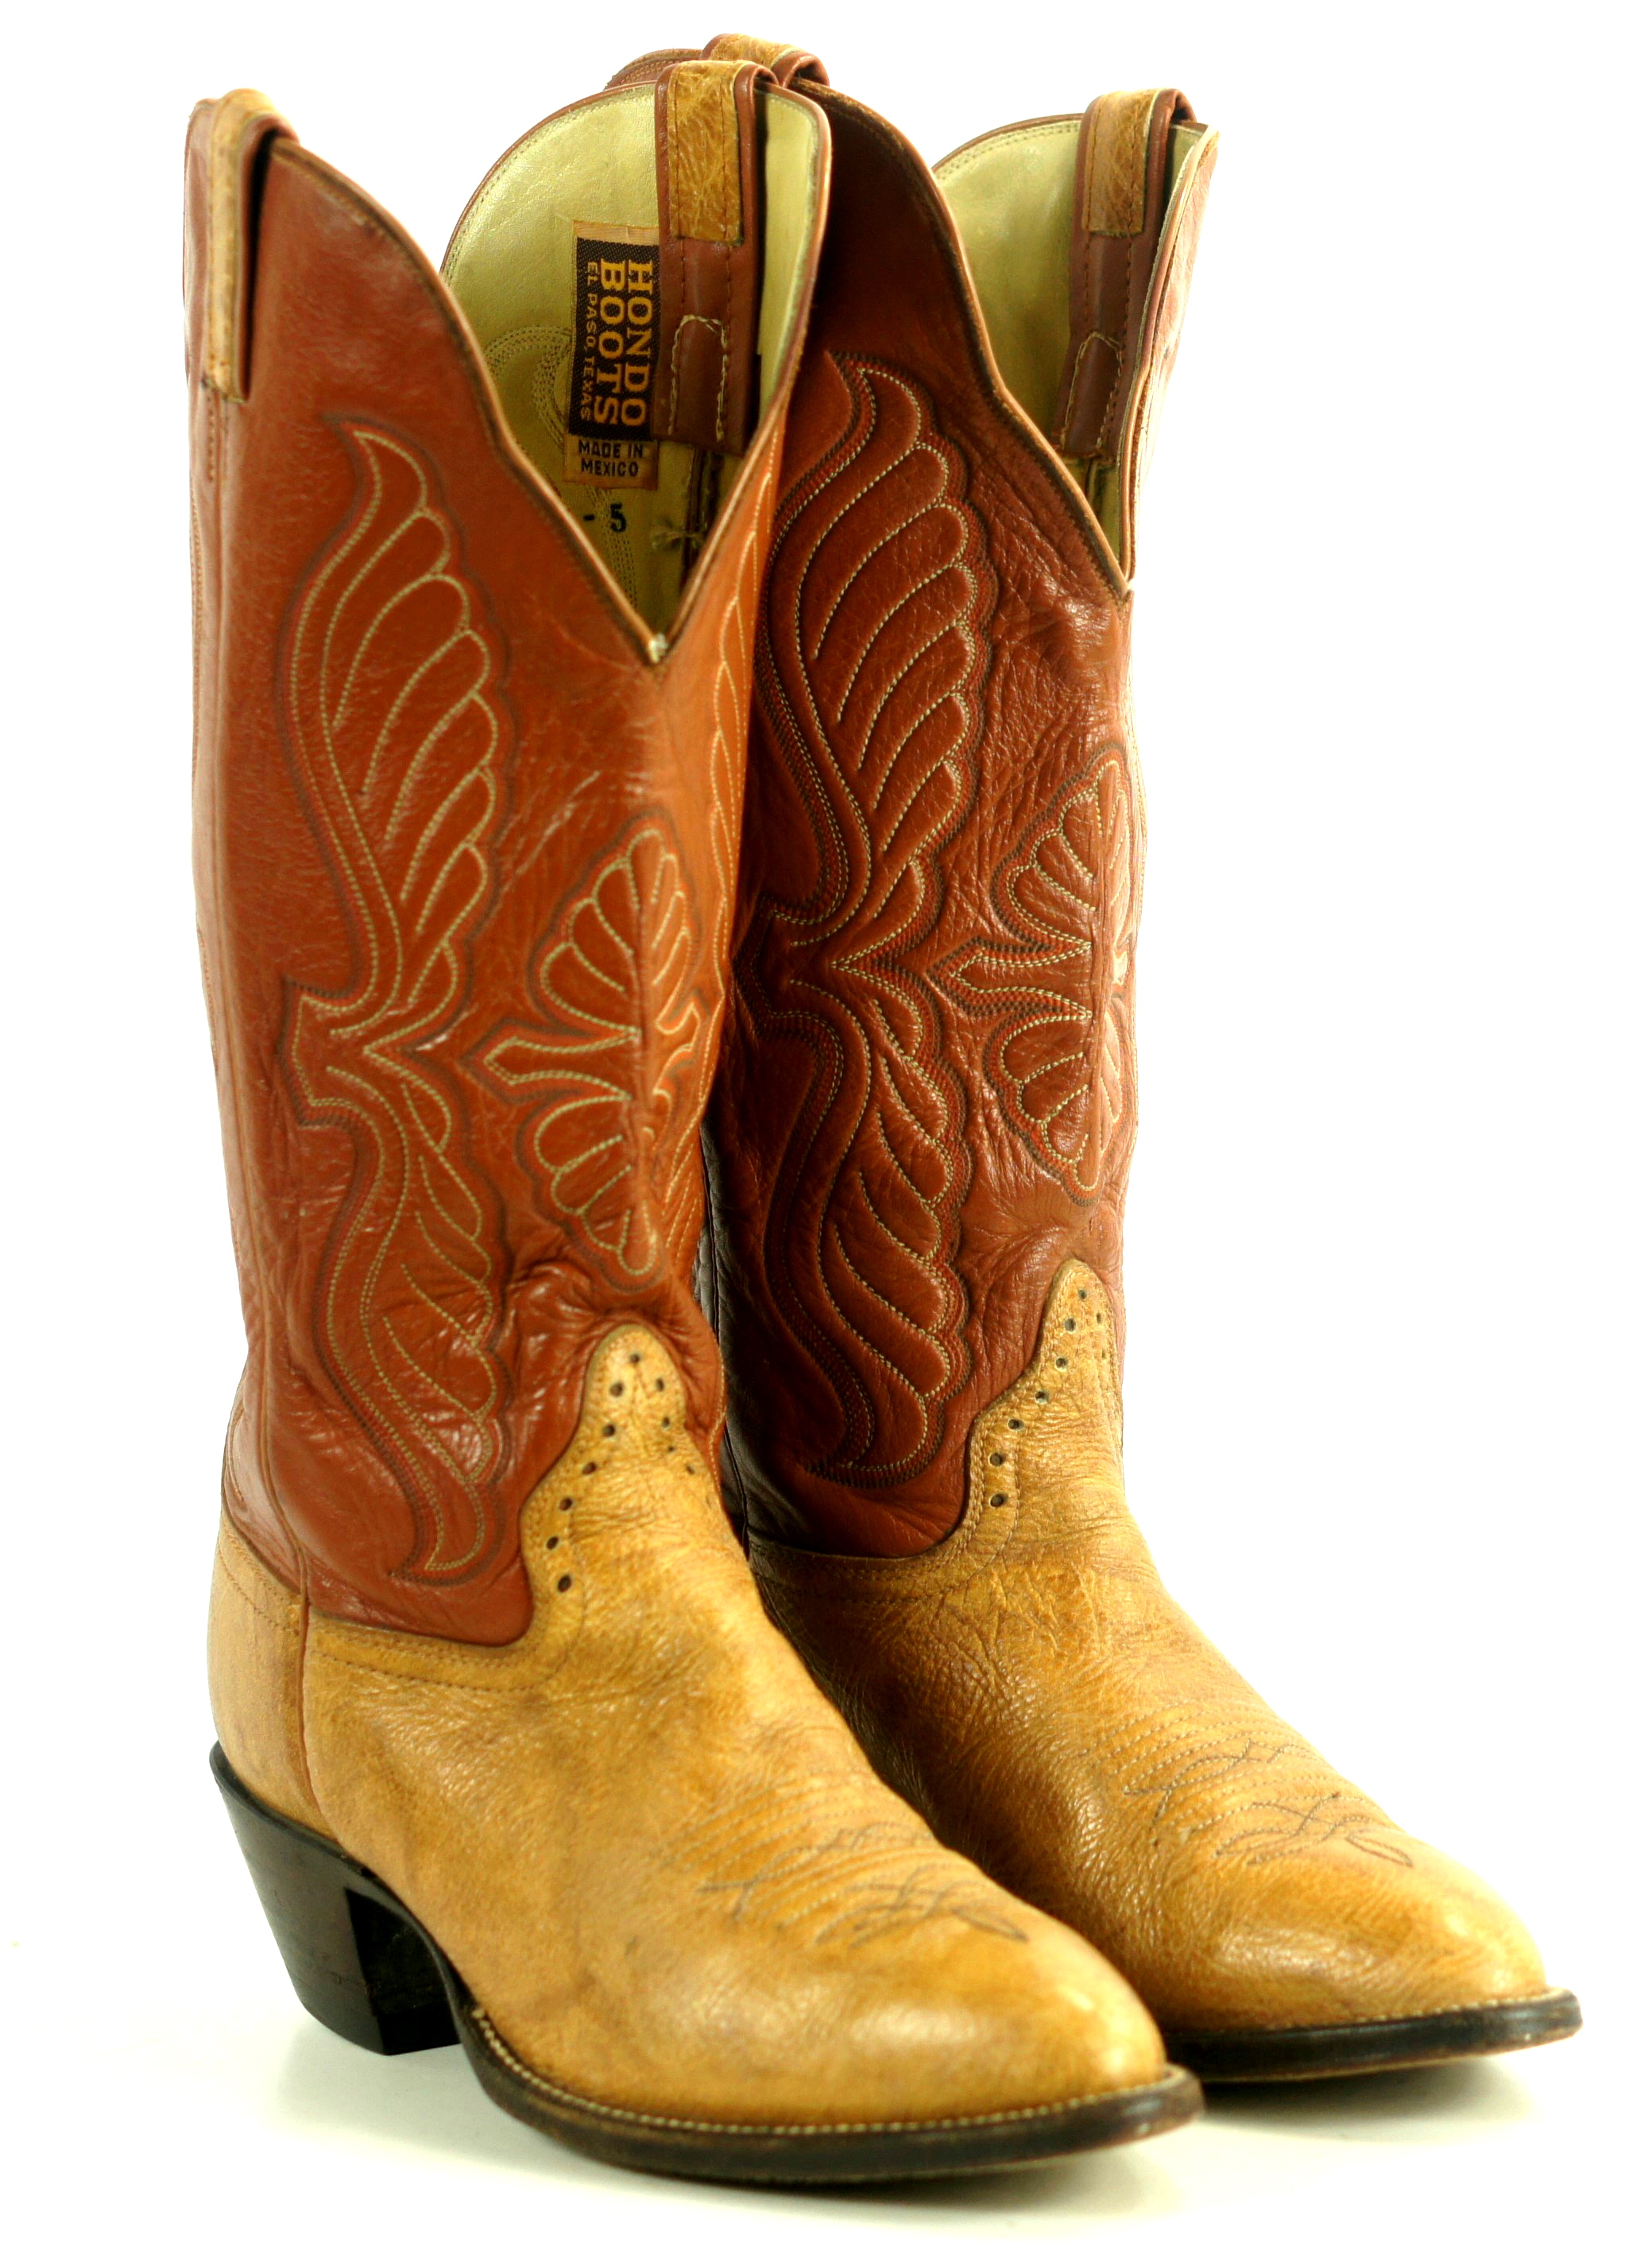 Hondo 16" Tall Top Cowboy Western Boots Caramel & Tan Leather Handmade